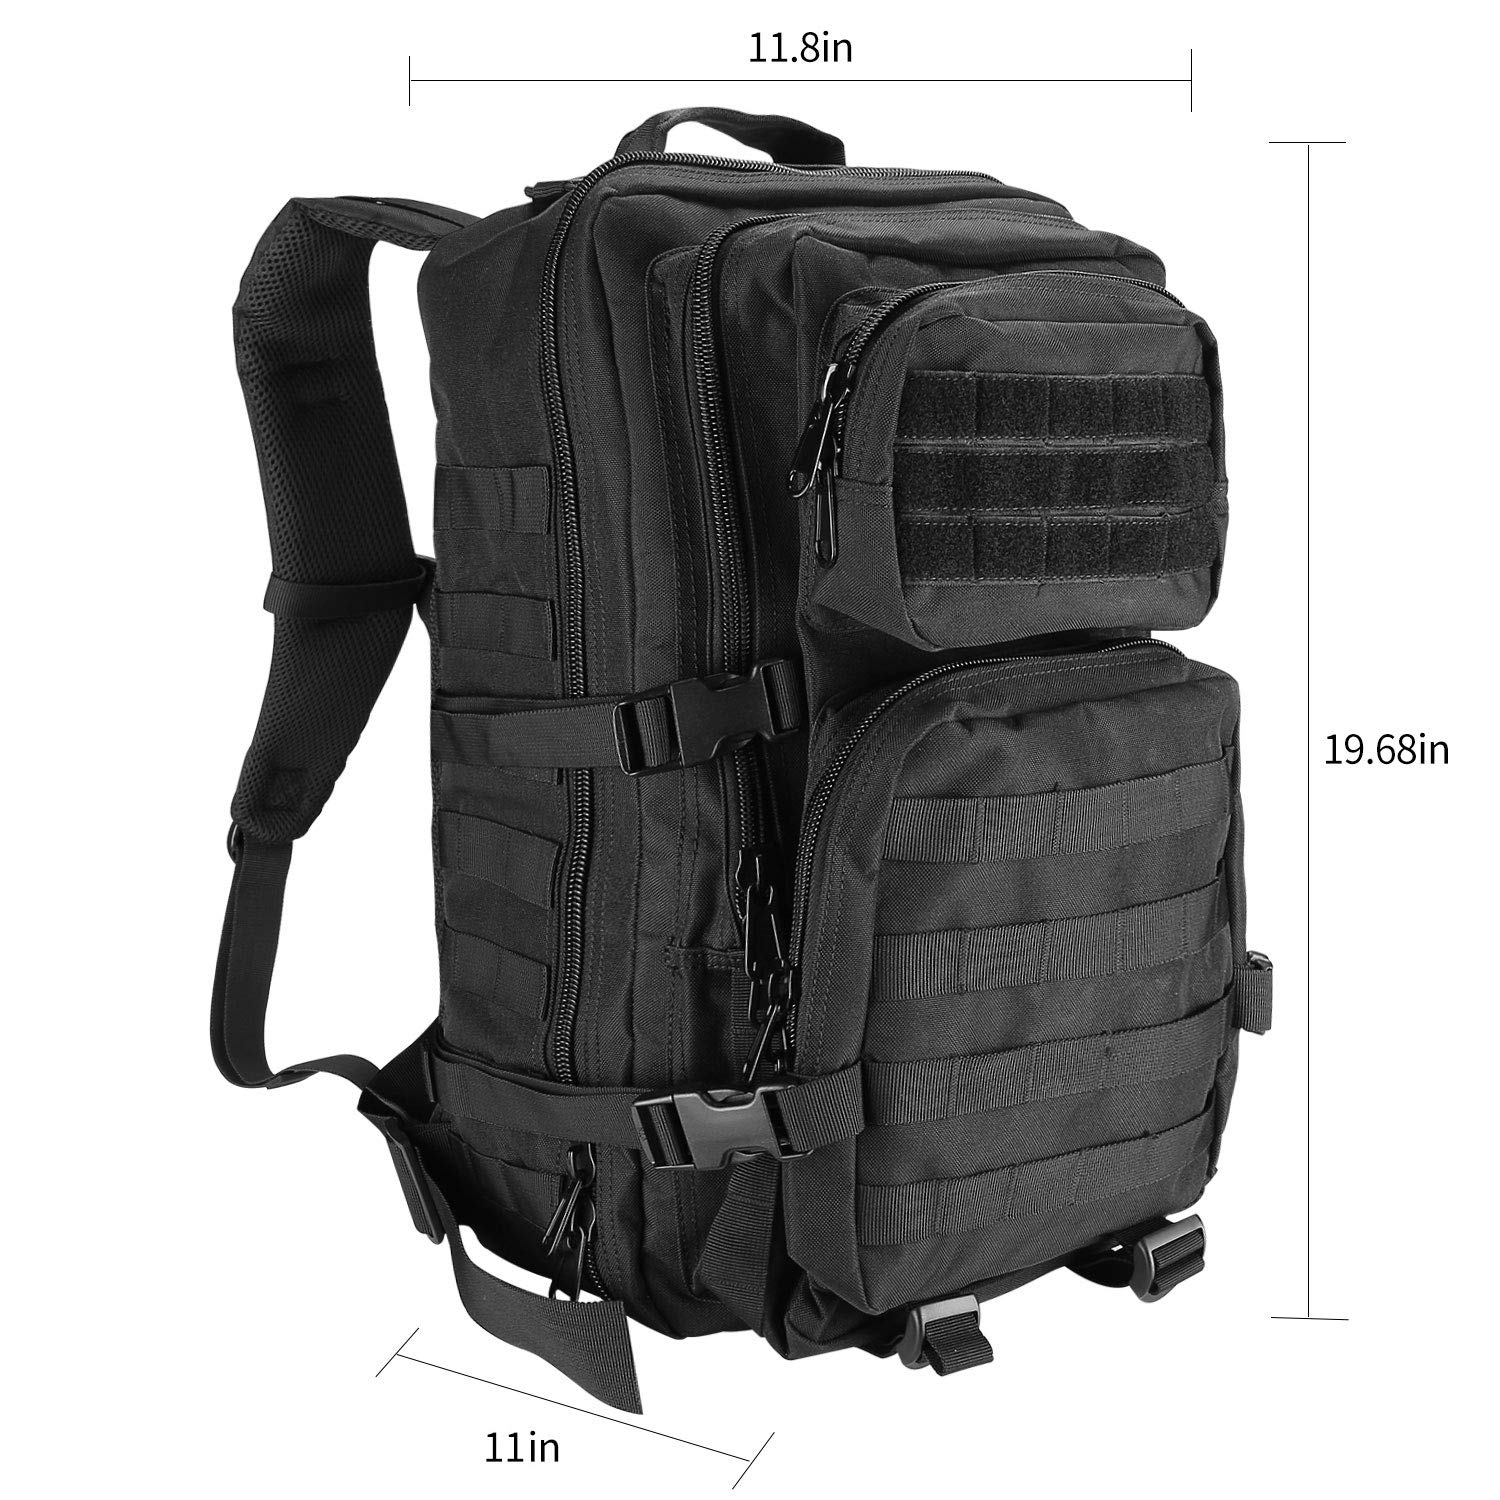 ProCase Tactical Backpack Bag 40L Large 3 Day Military Army Outdoor Assault Pack Rucksacks Carry Bag Backpacks -Black